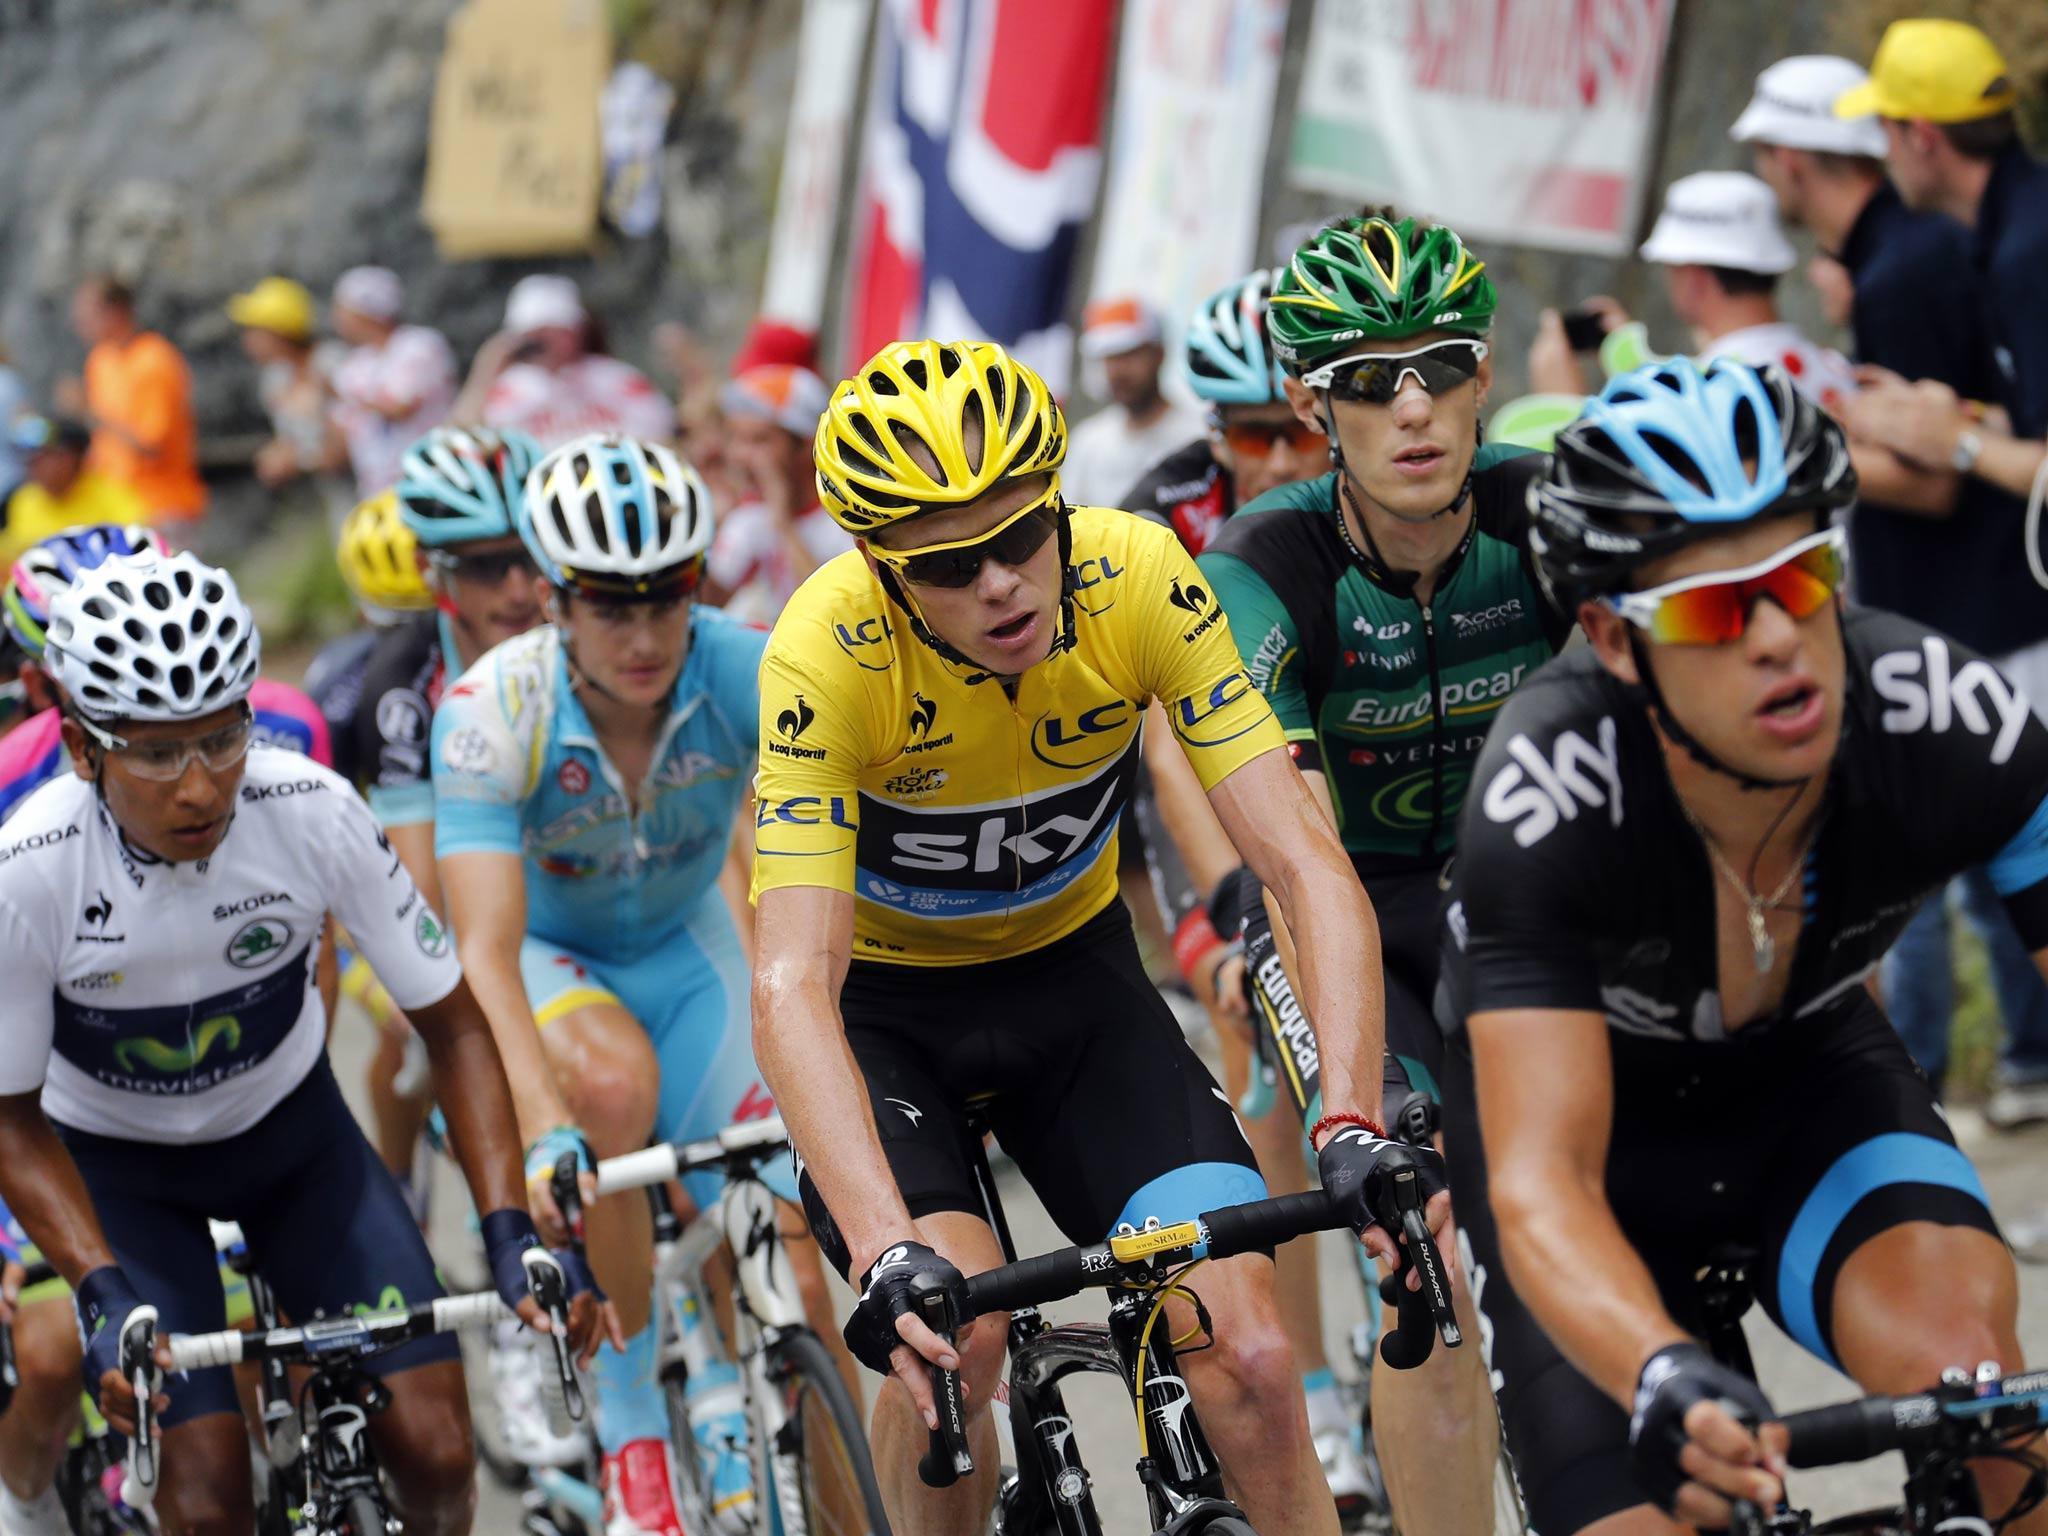 Tour de France 2013: Chris Froome survives late energy crisis to